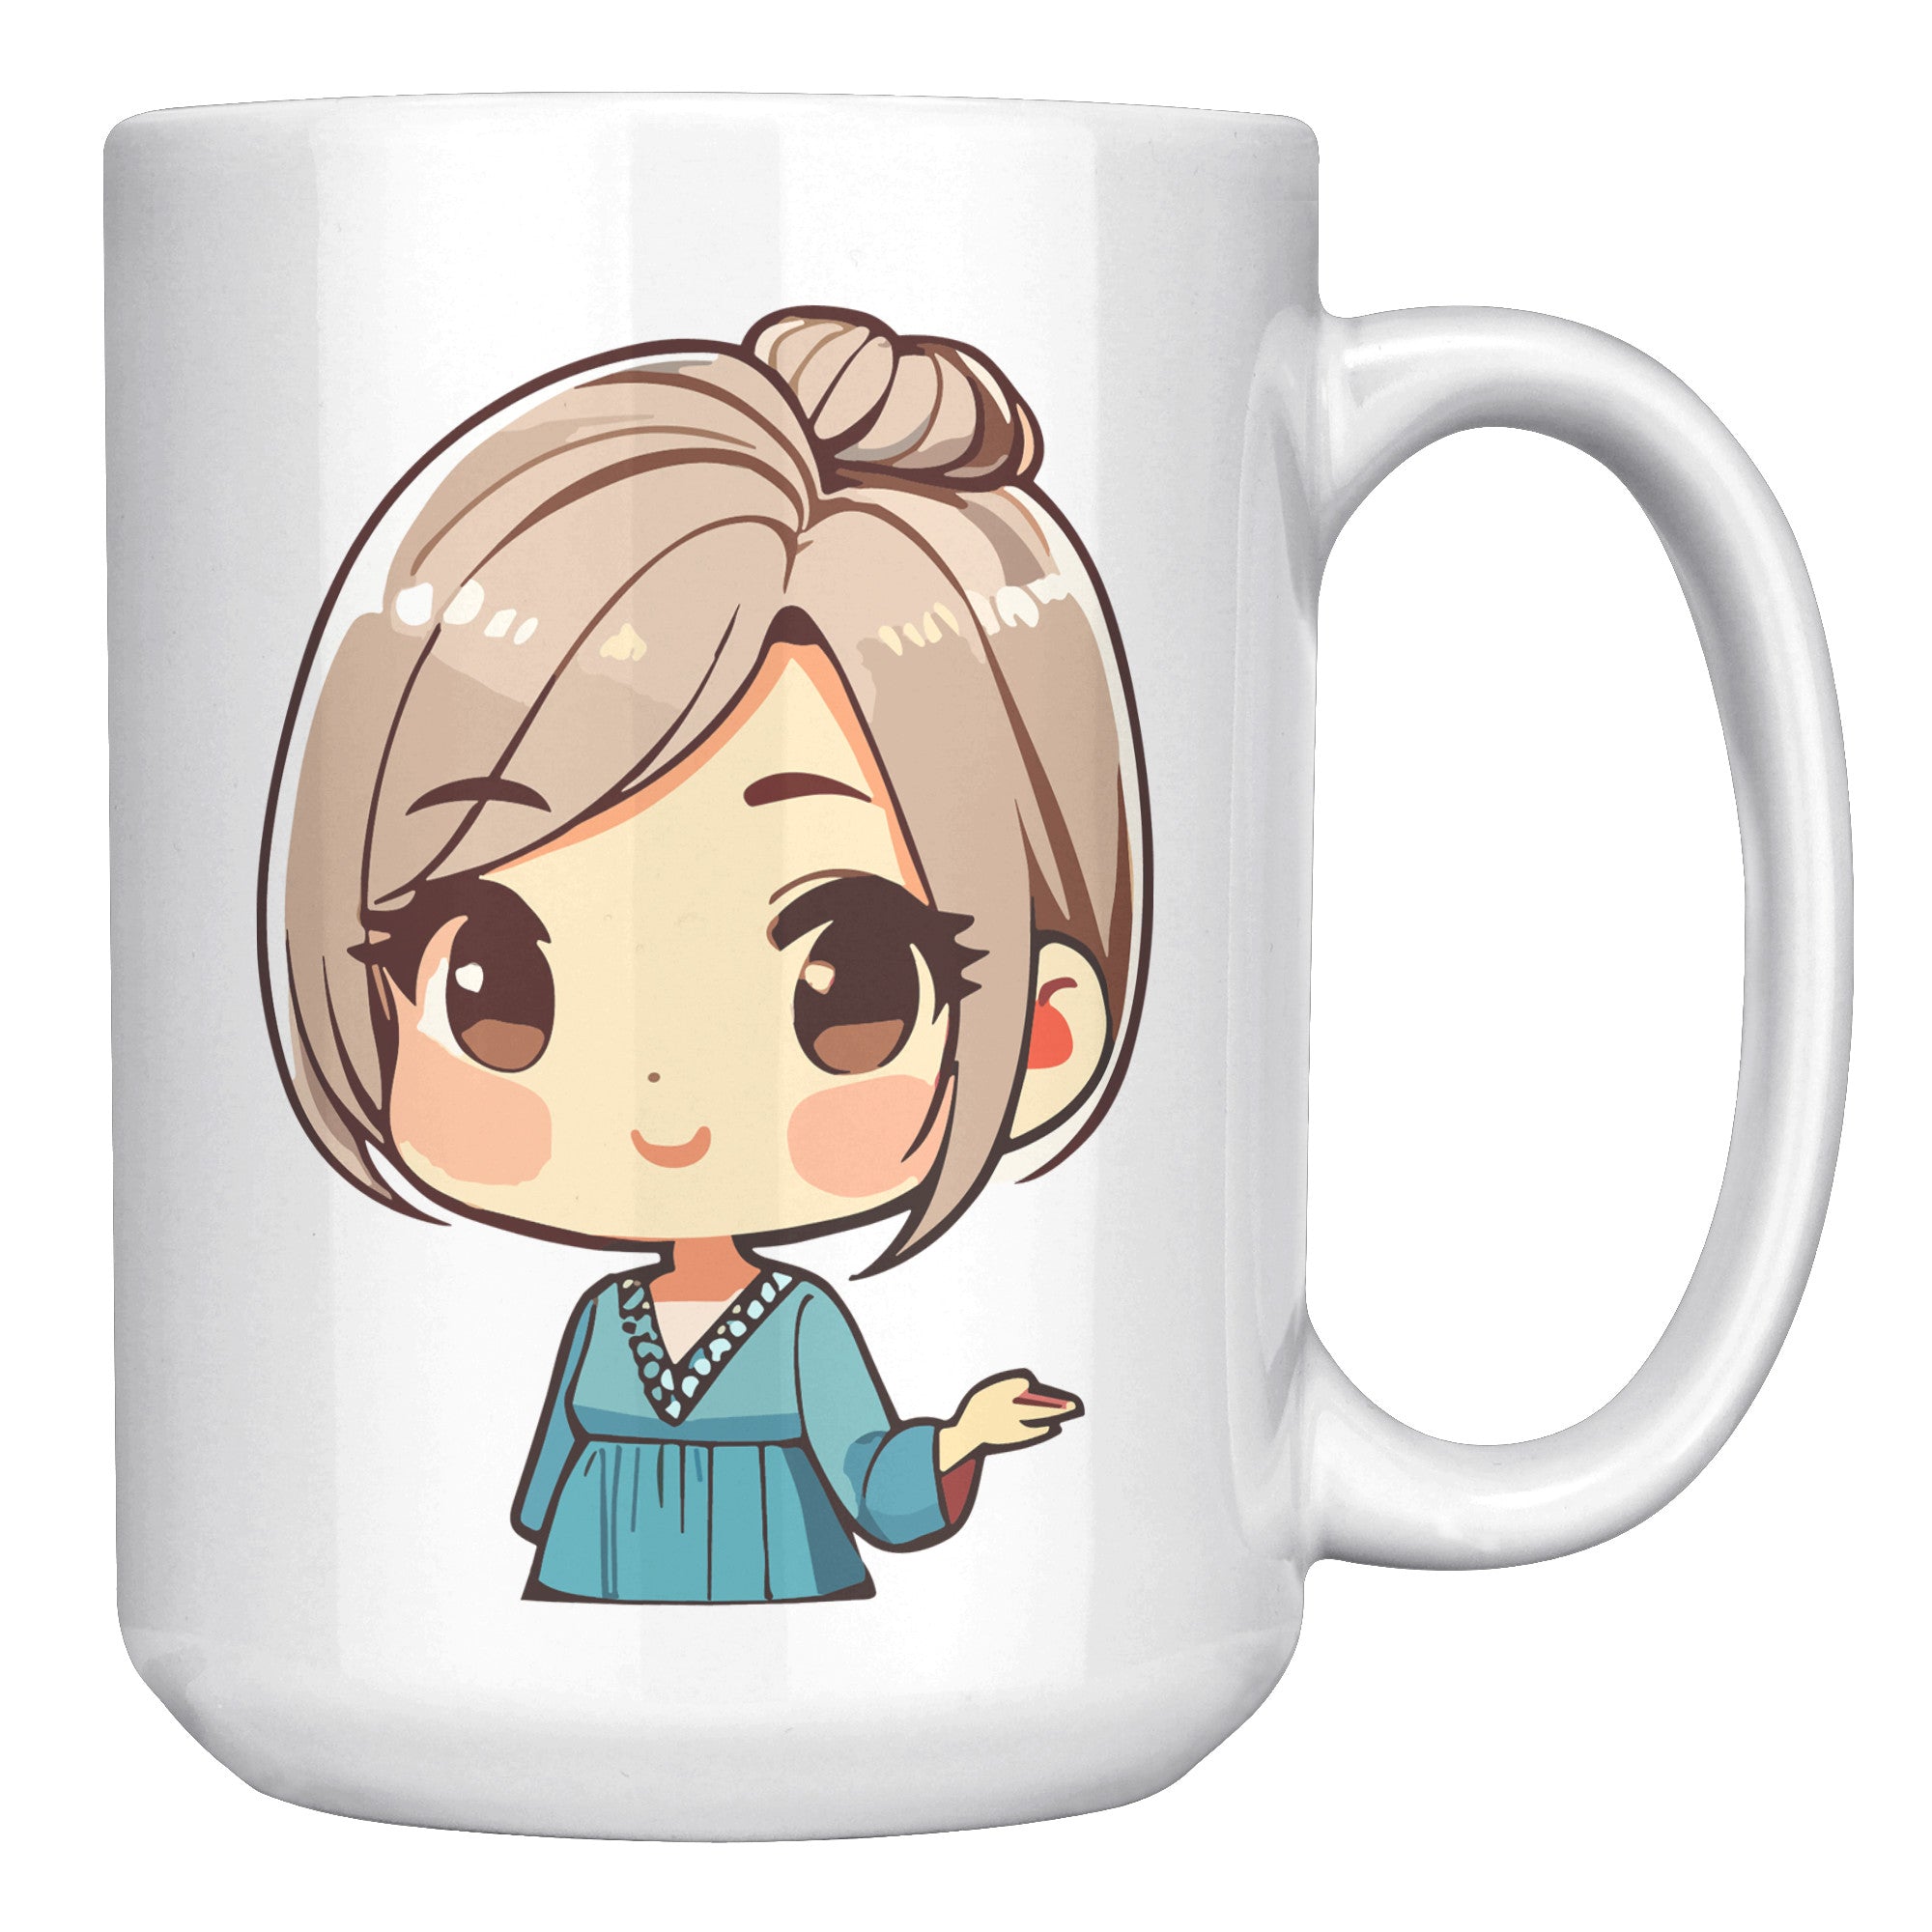 "Marites Gossip Queen Coffee Mug - Cute Cartoon 'Ano Ang Latest?' Cup - Perfect Chismosa Gift - Filipino Slang Tea Mug" - GG1